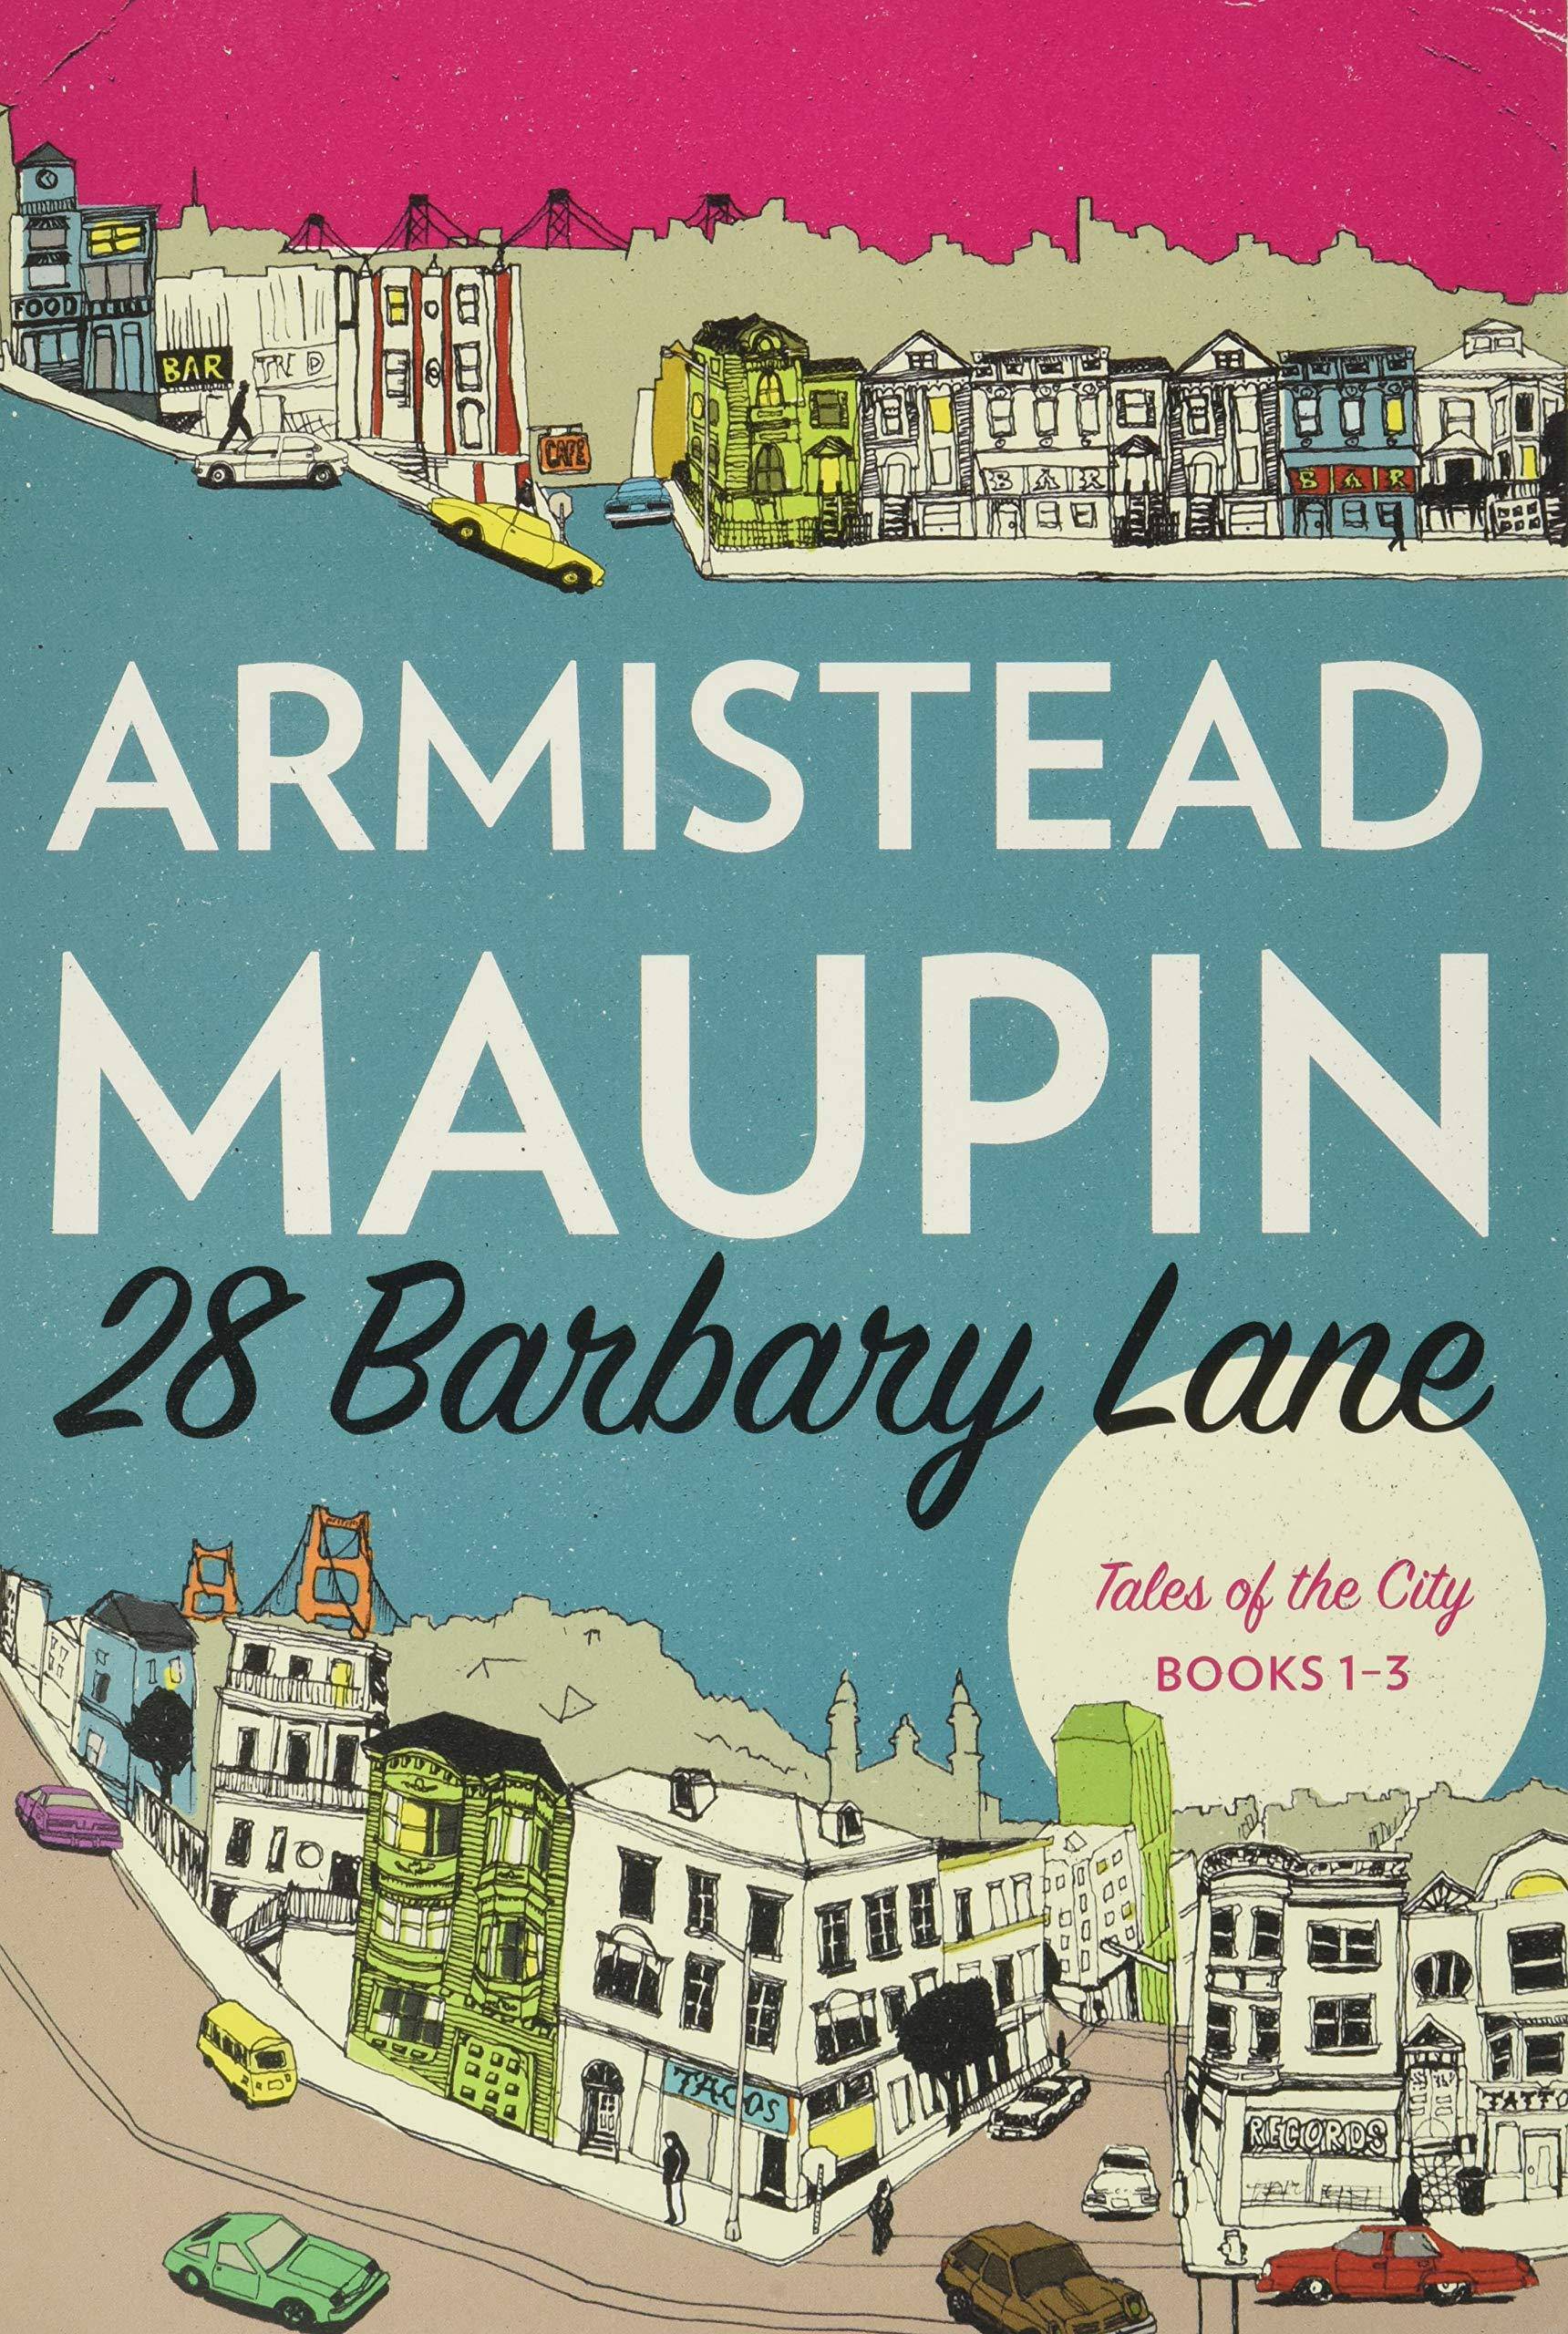 28 Barbary Lane: "tales of the City" Books 1-3 - SureShot Books Publishing LLC